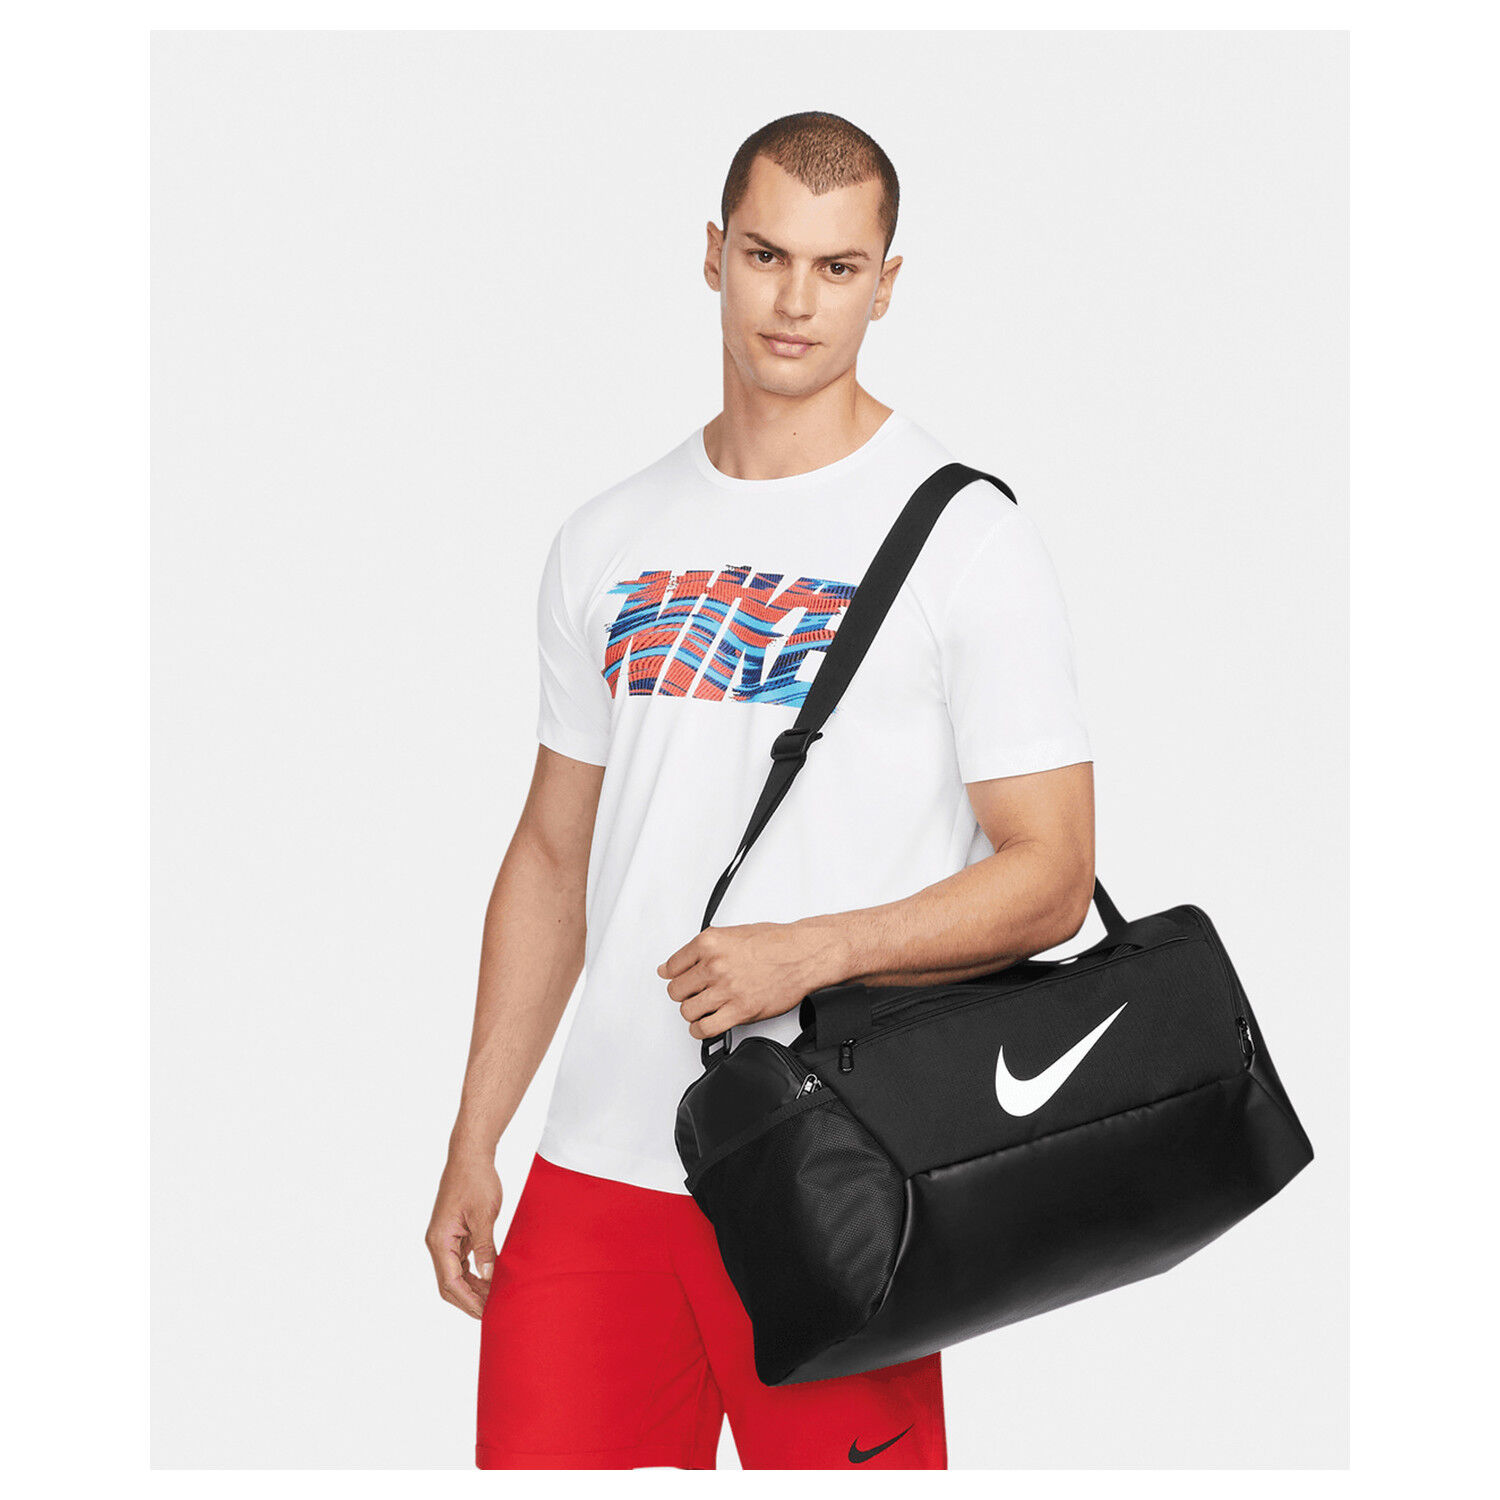 Nike Brasilia Small Duffle Bag 41L